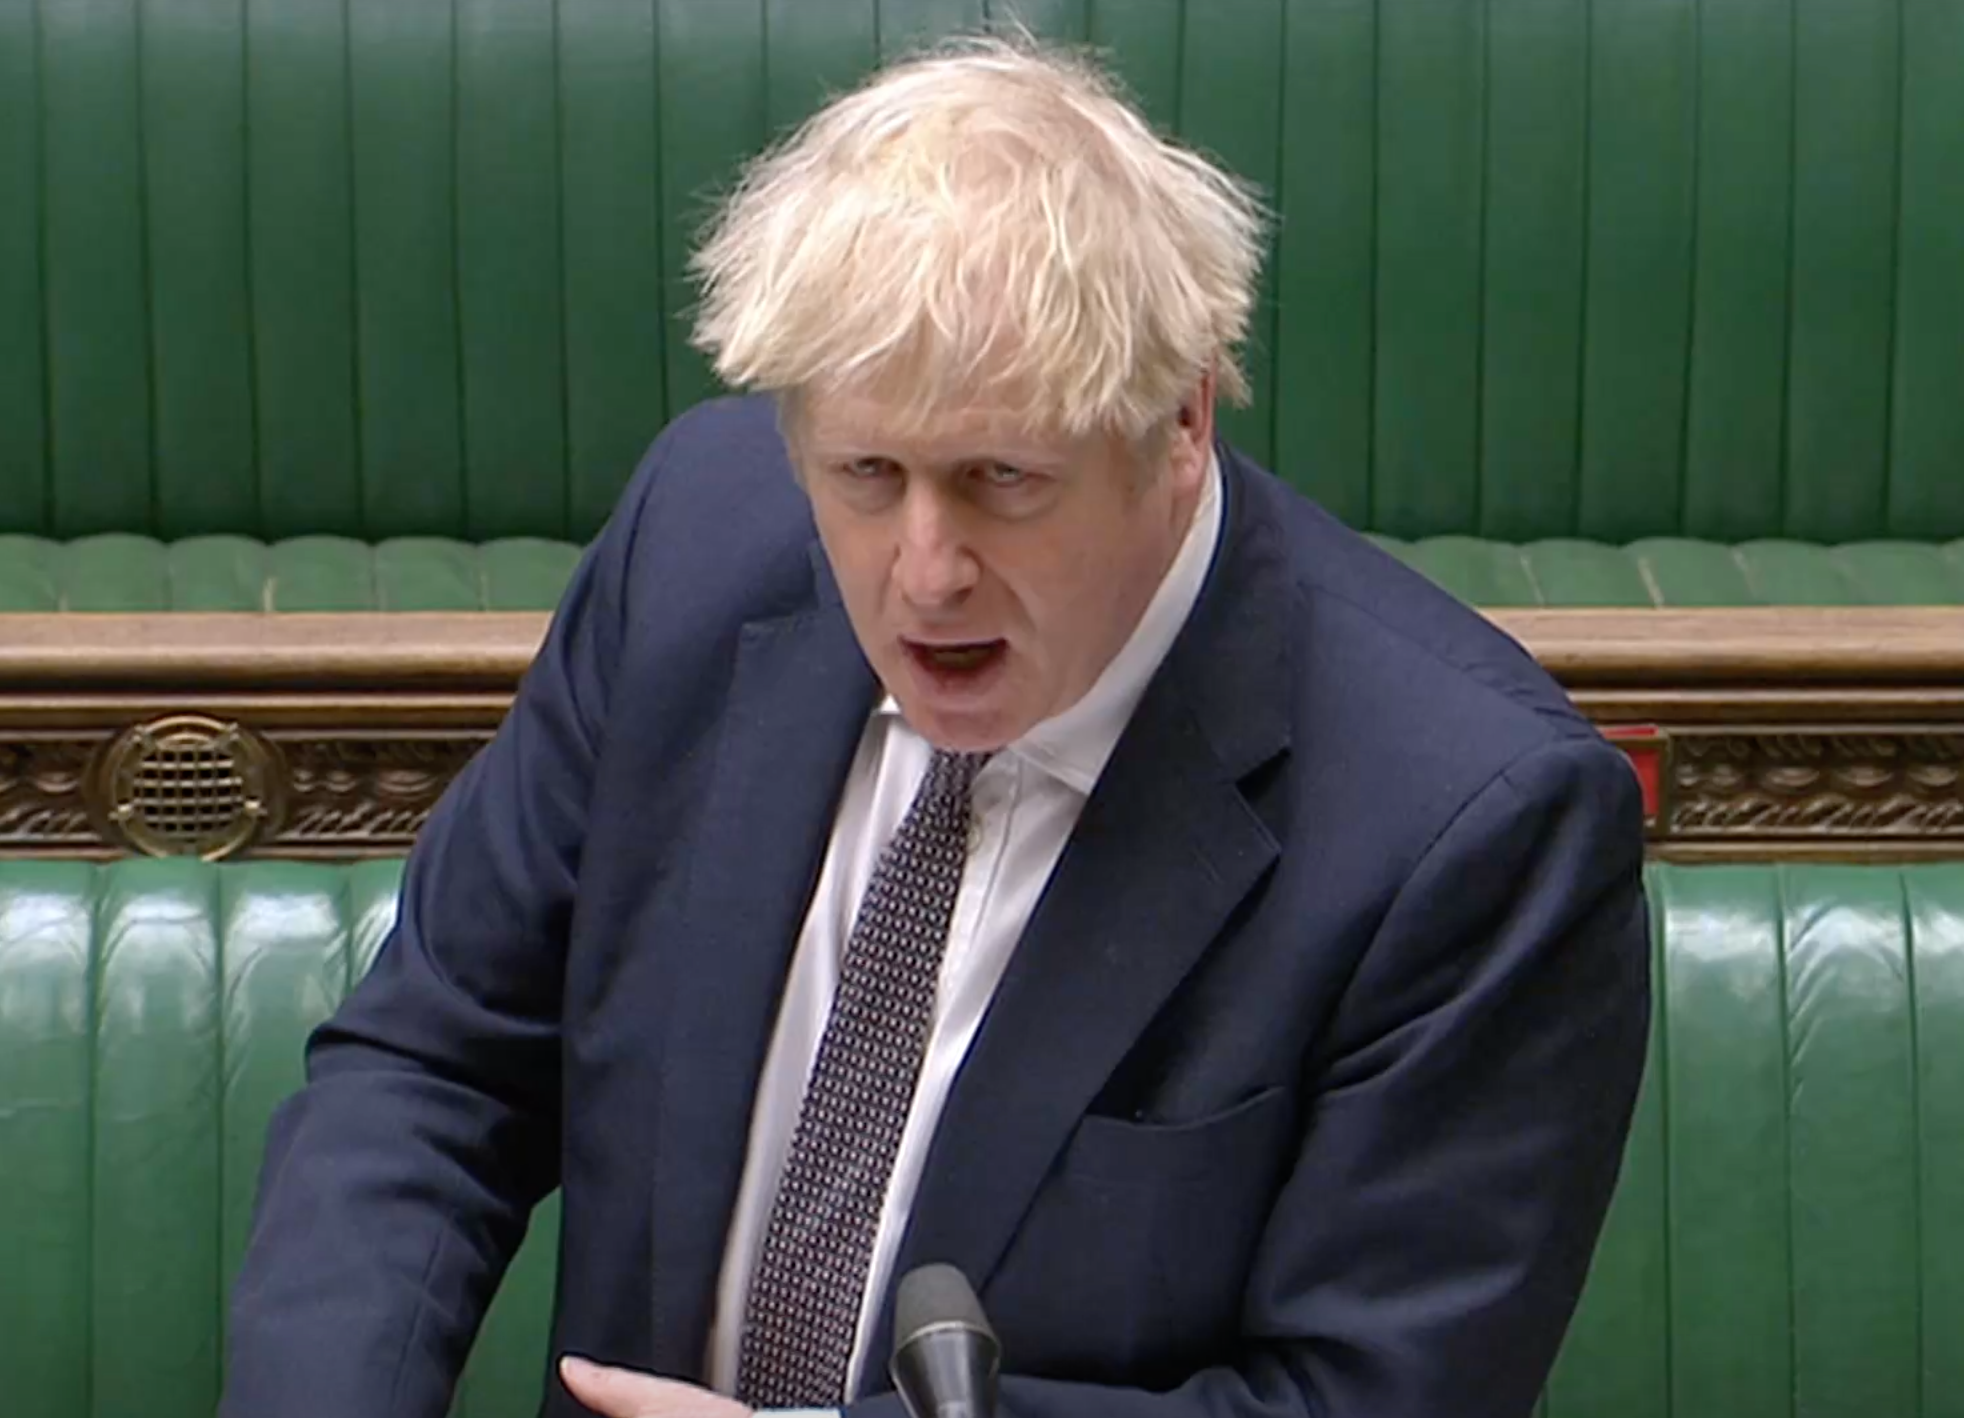 Boris Johnson, looking prime ministerial